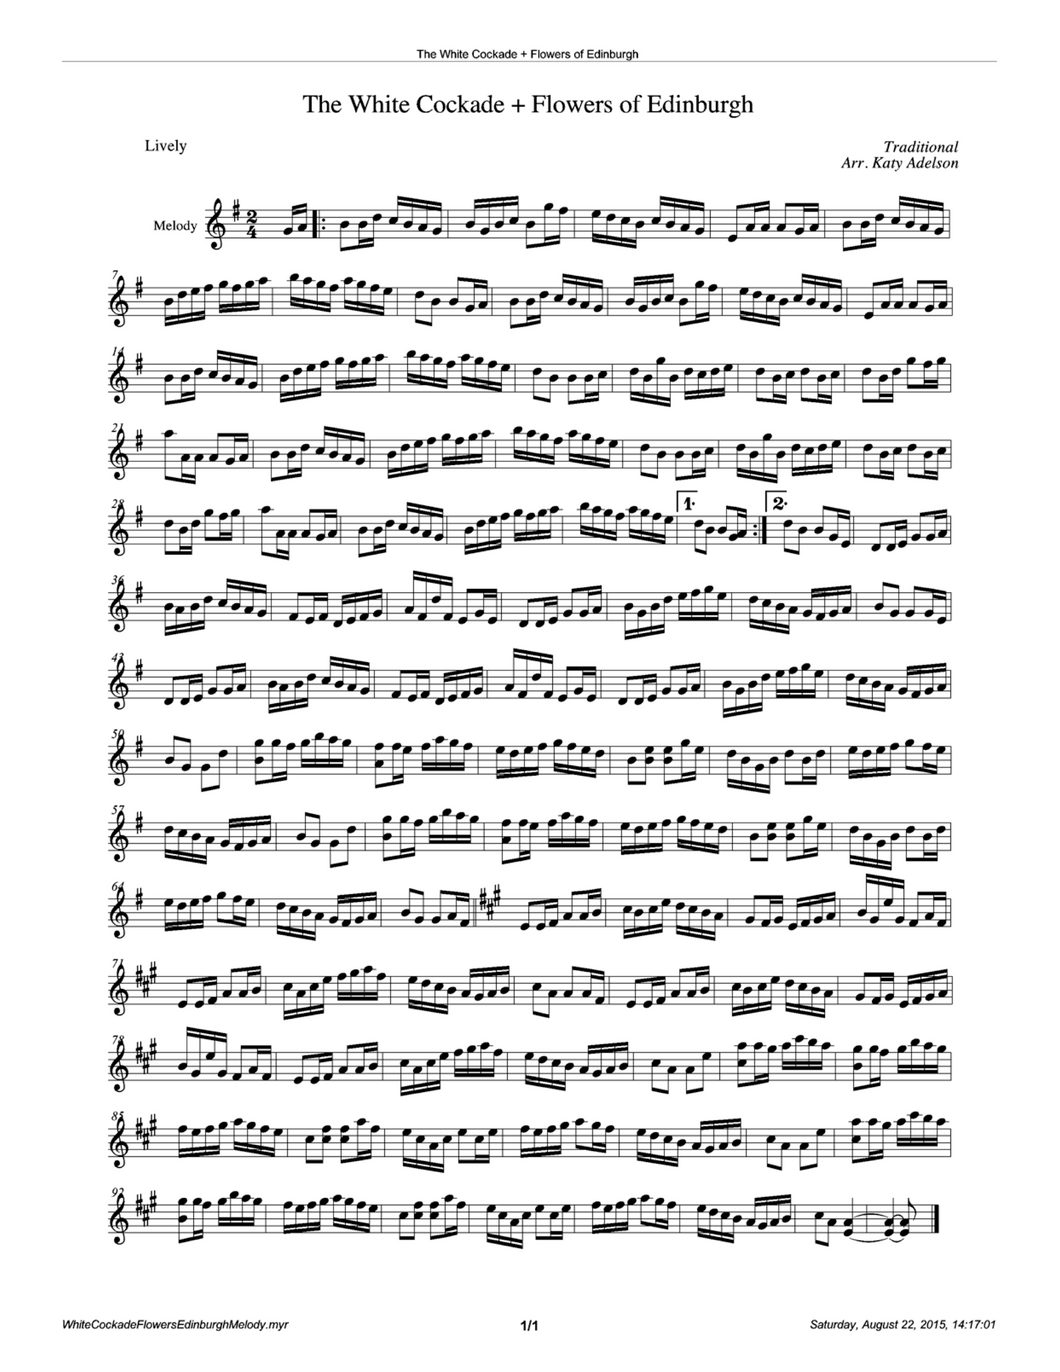 White Cockade + Flowers of Edinburg  Violin Sheet Music - Arranged by Katy Adelson